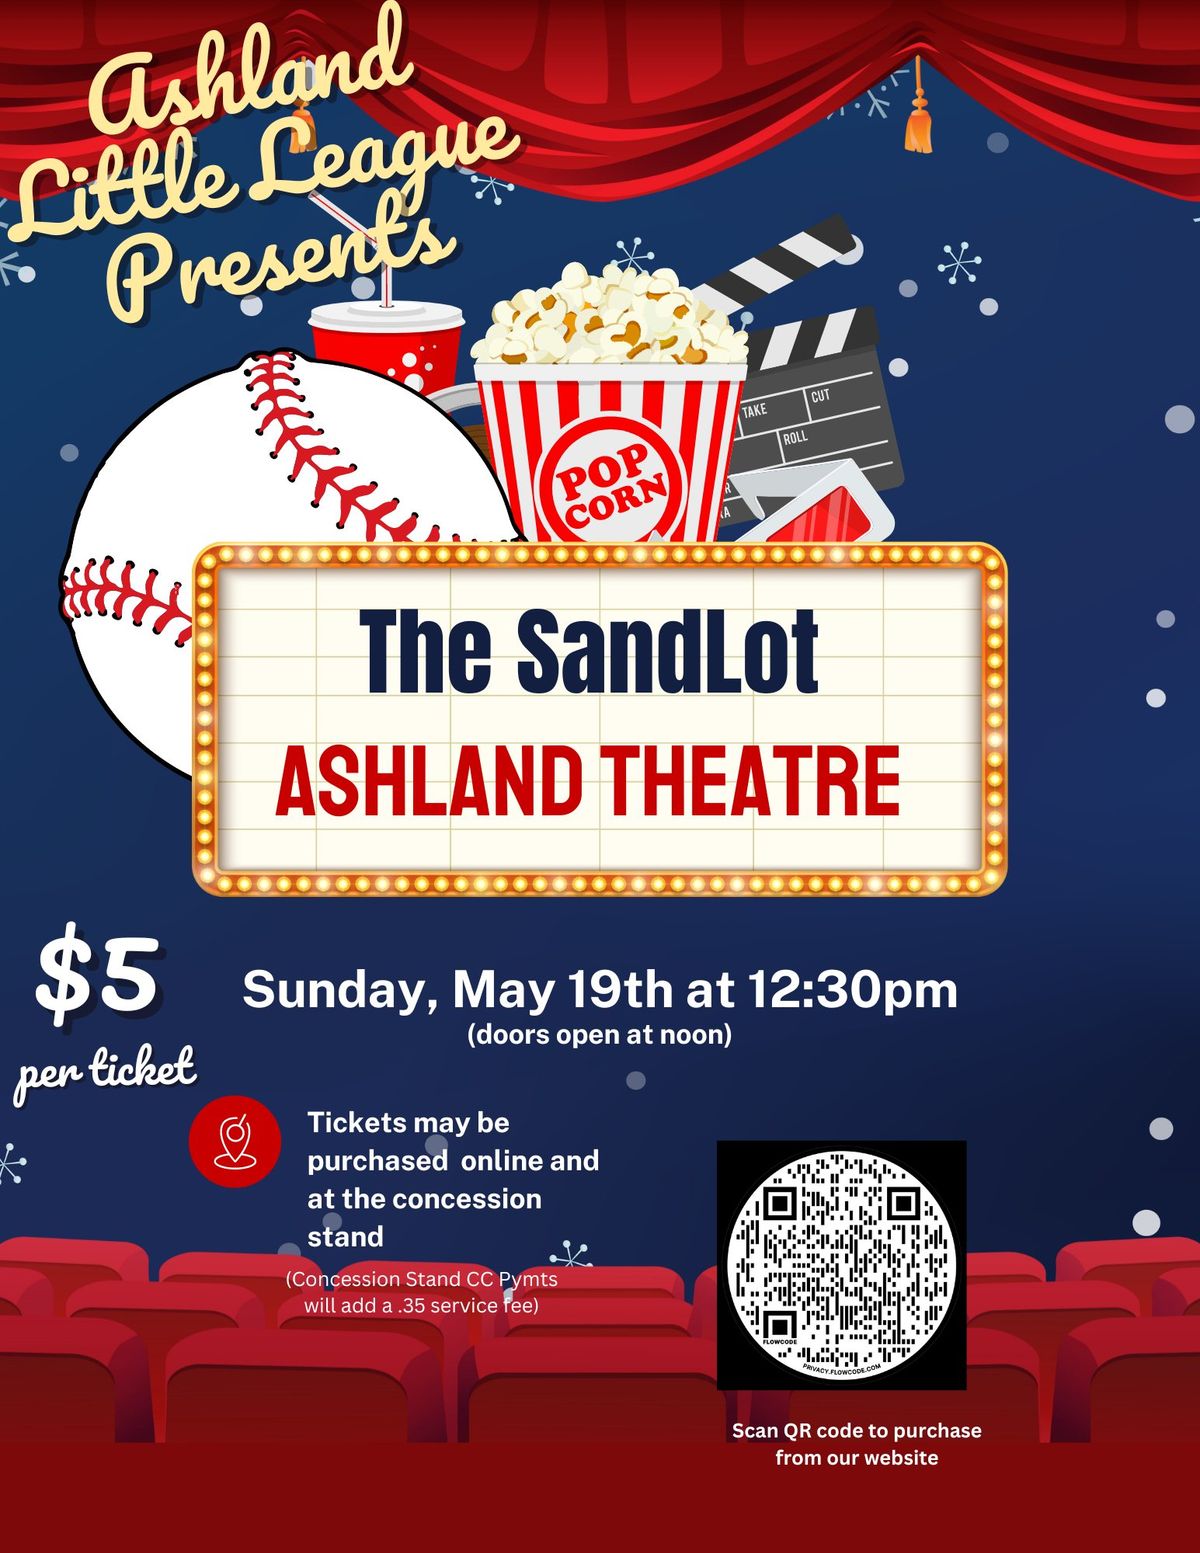 The Sandlot at Ashland Theatre